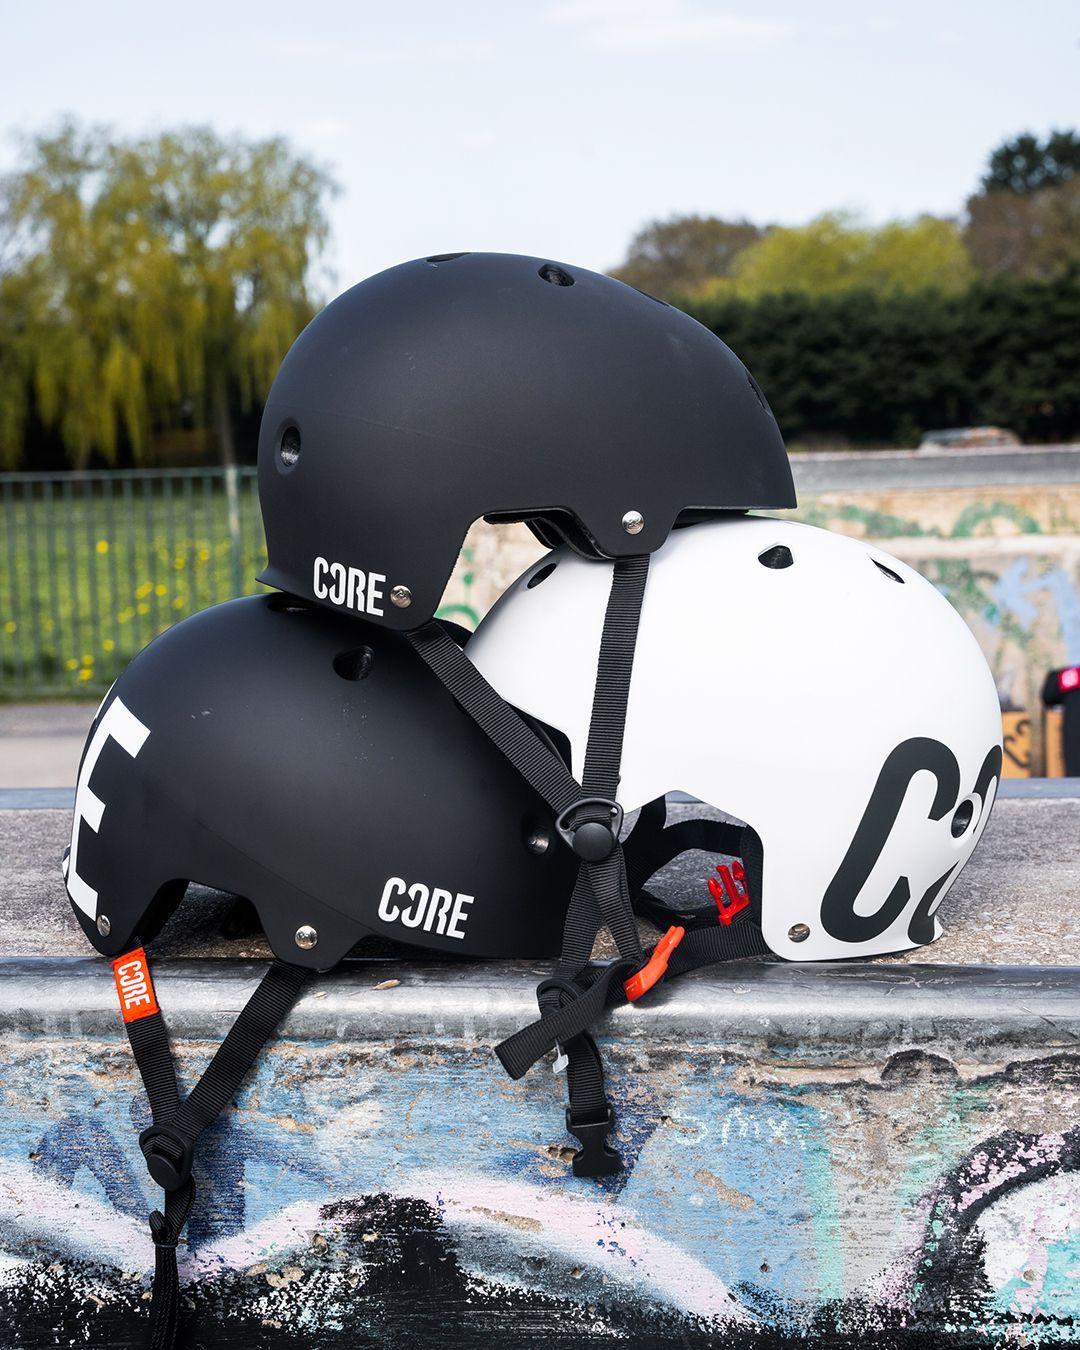 Product Spotlight: The CORE Street Helmet Review